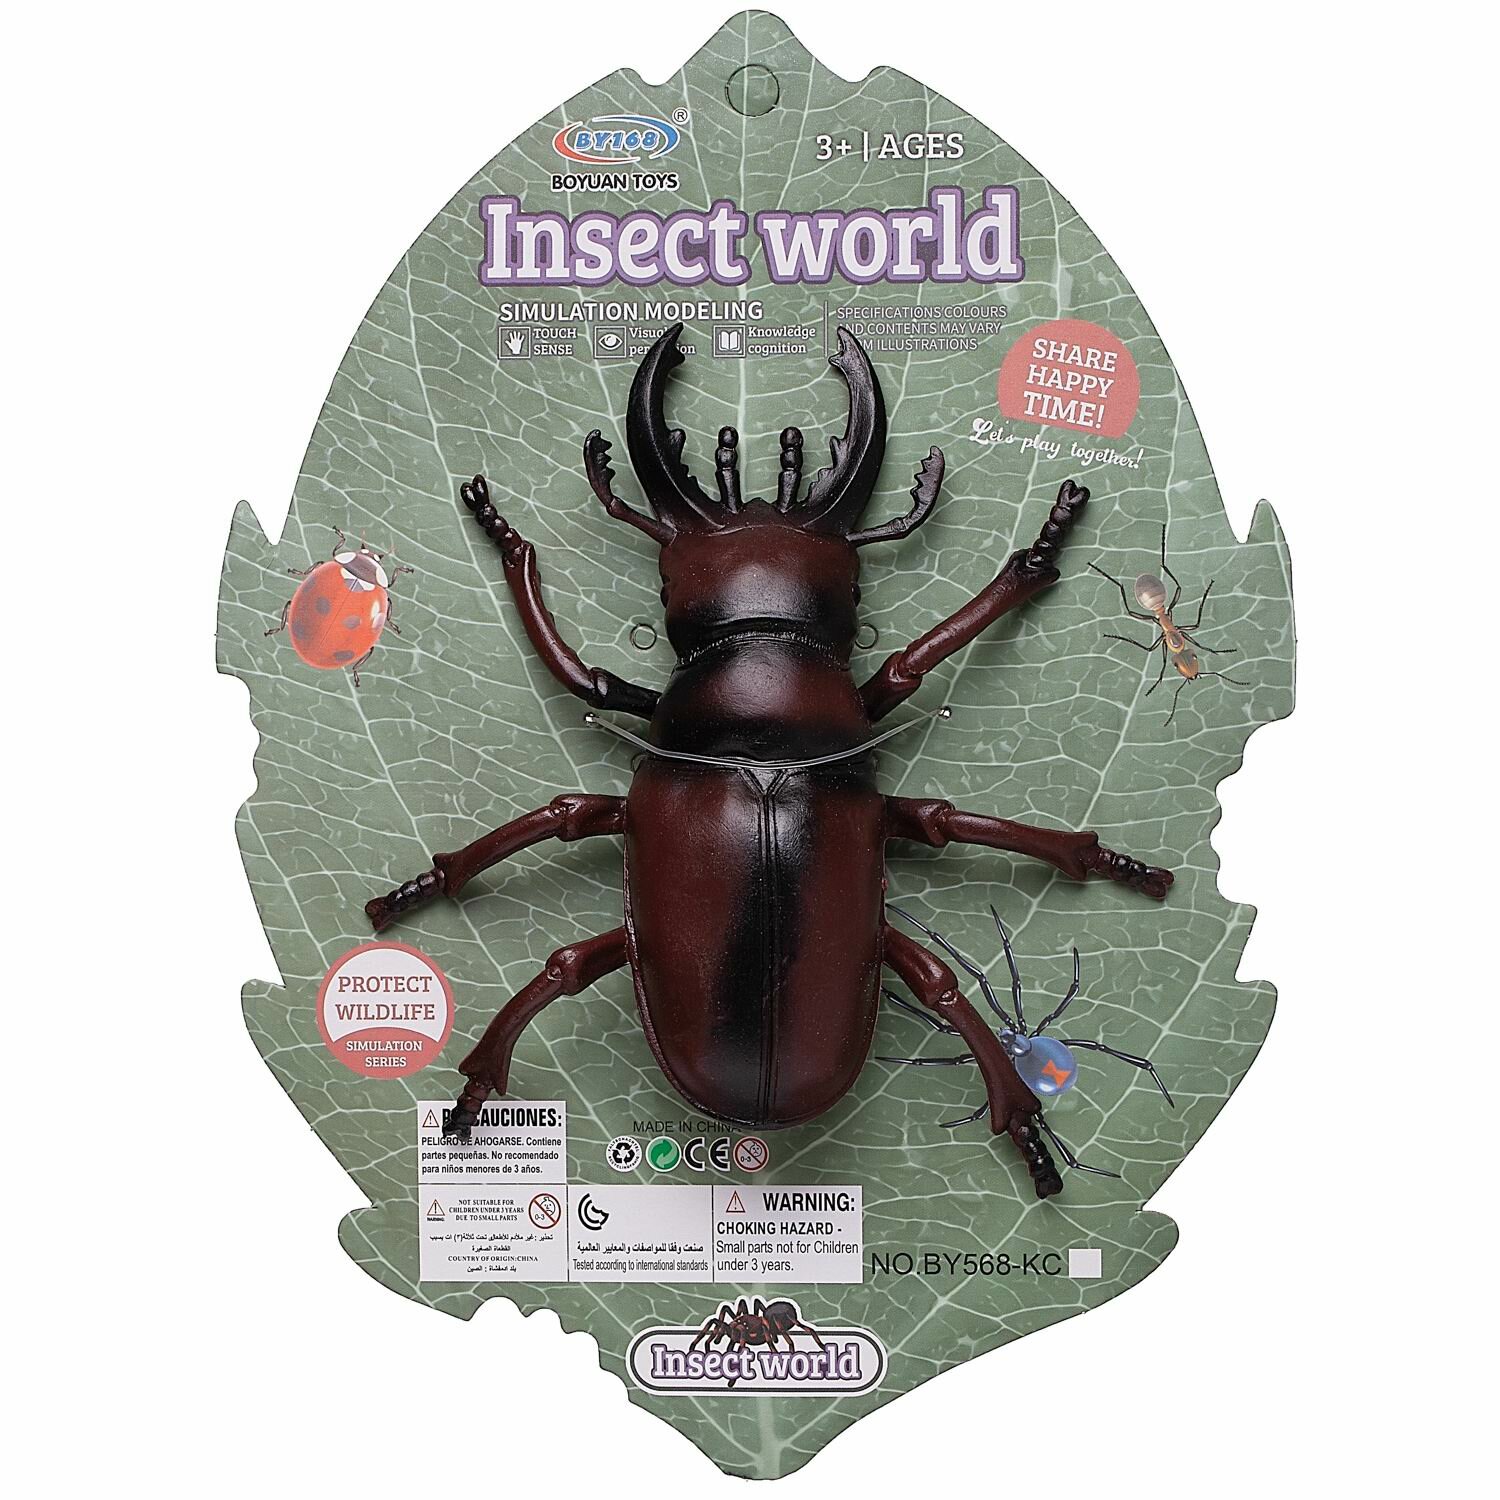 Фигурка гигантская Junfa насекомого &quotЖук-геркулес&quot, на блистере WA-25523